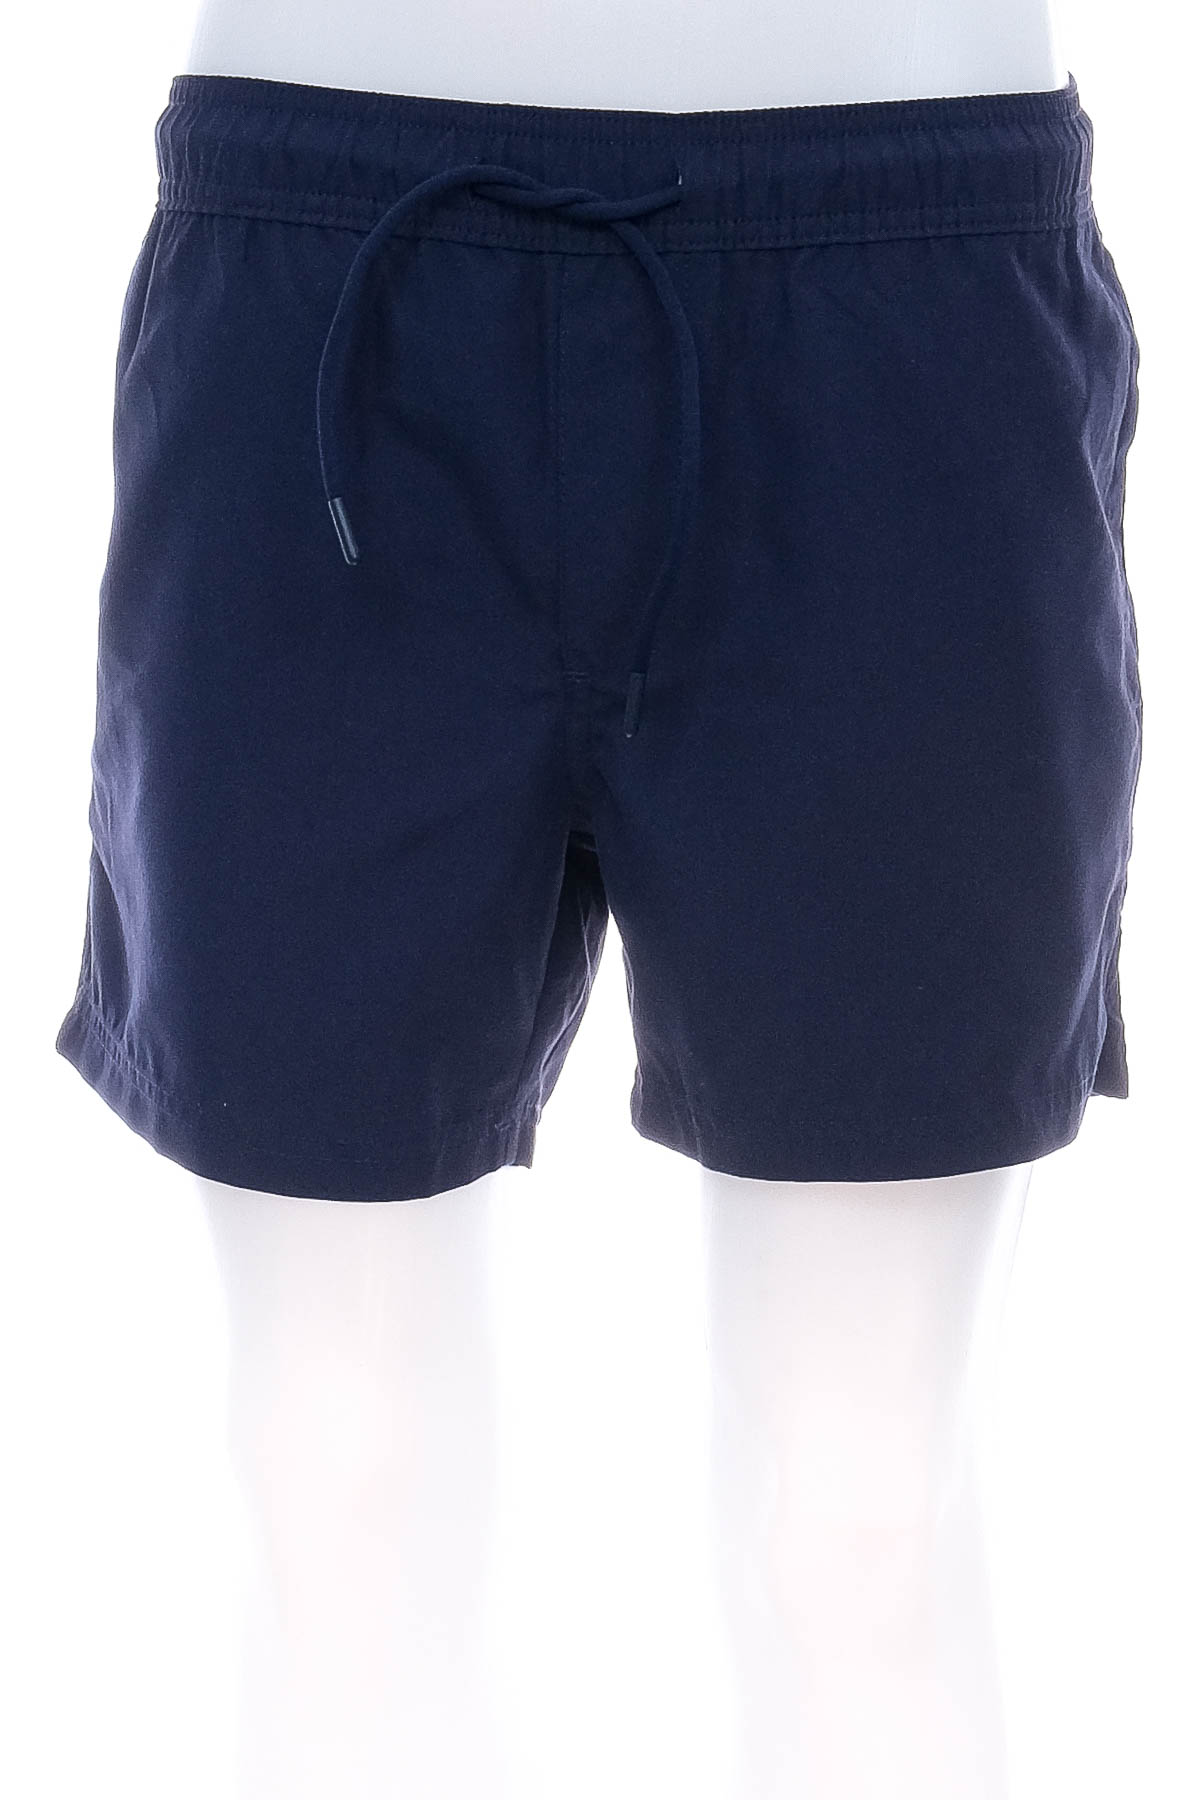 Men's shorts - Cotton On Garments - 0